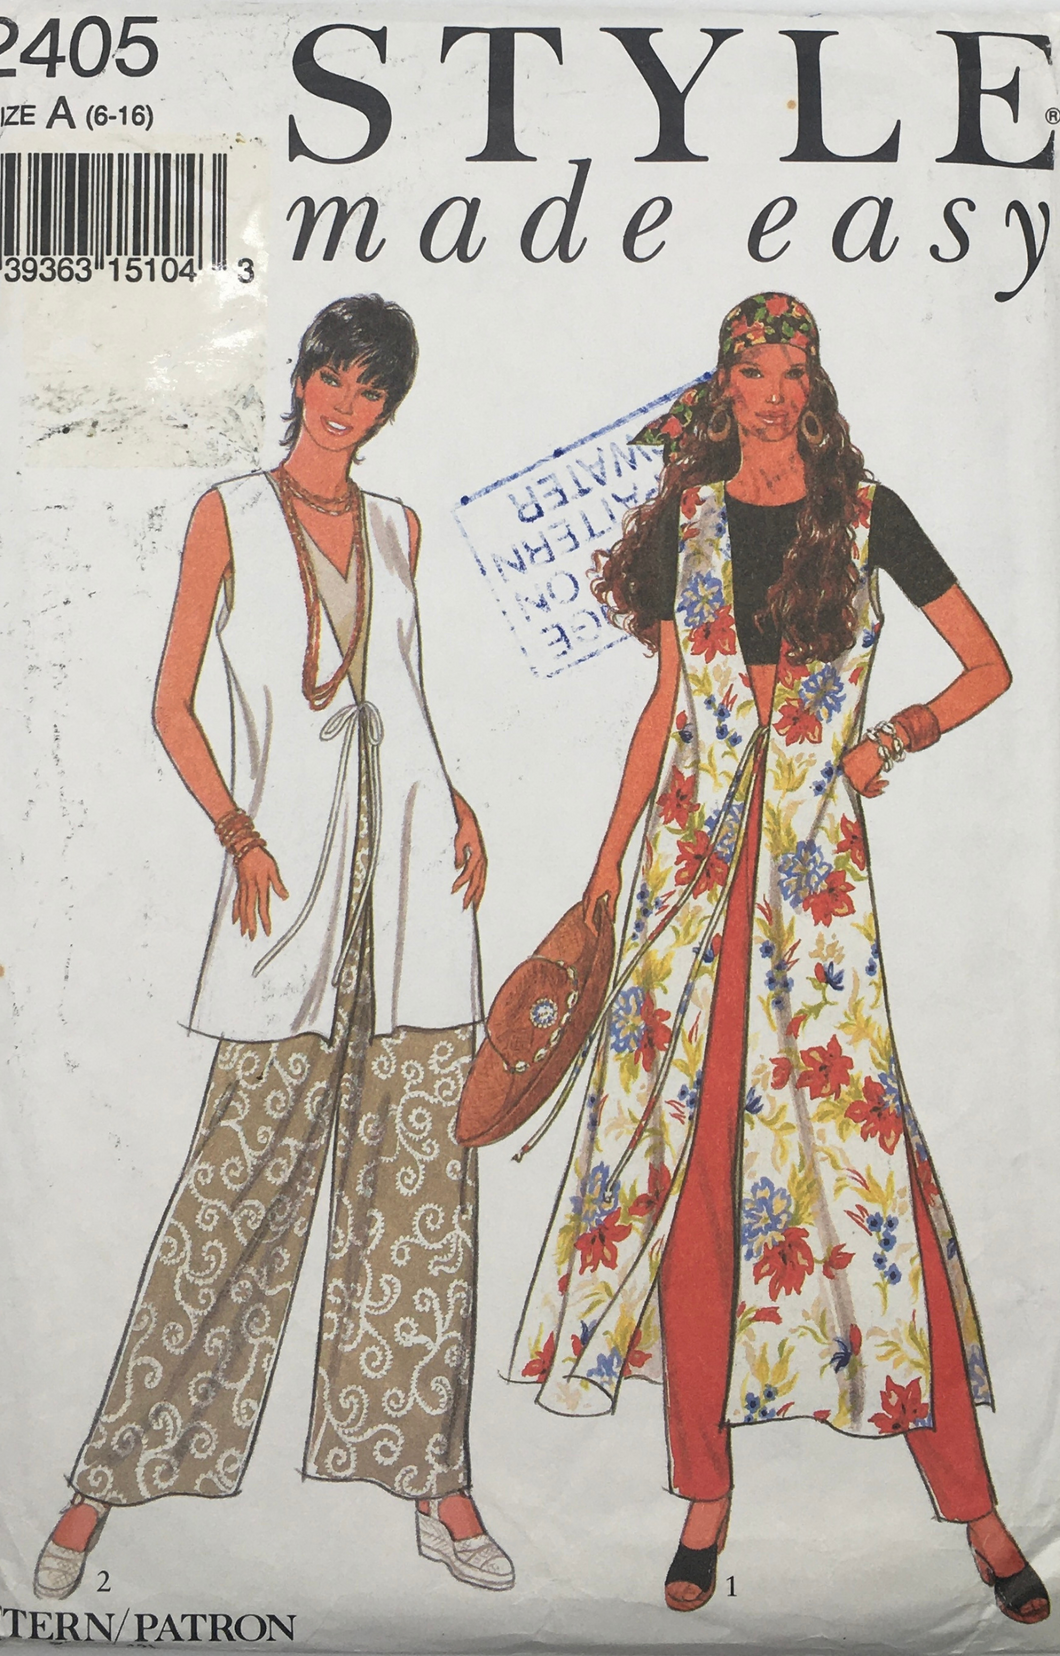 1994 Vintage Sewing Pattern: Style 2405